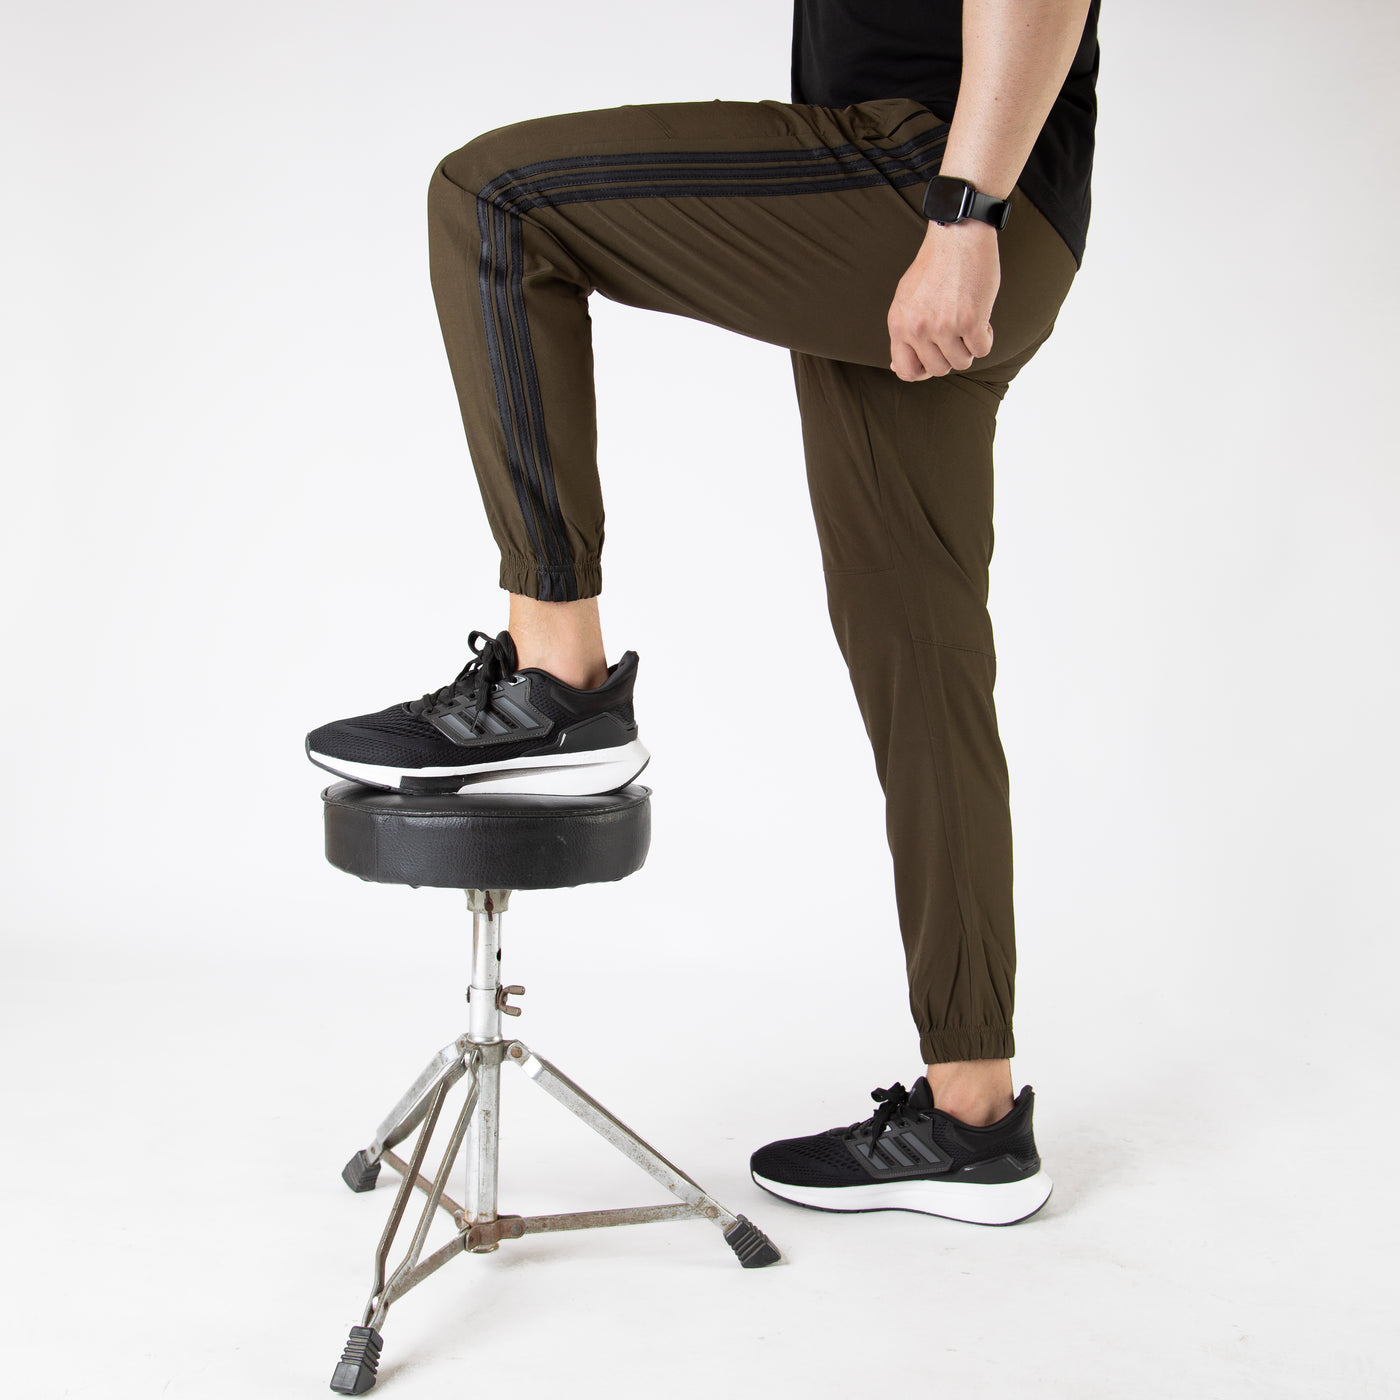 Olive Premium Micro Stretch Pants with Three Black Stripes